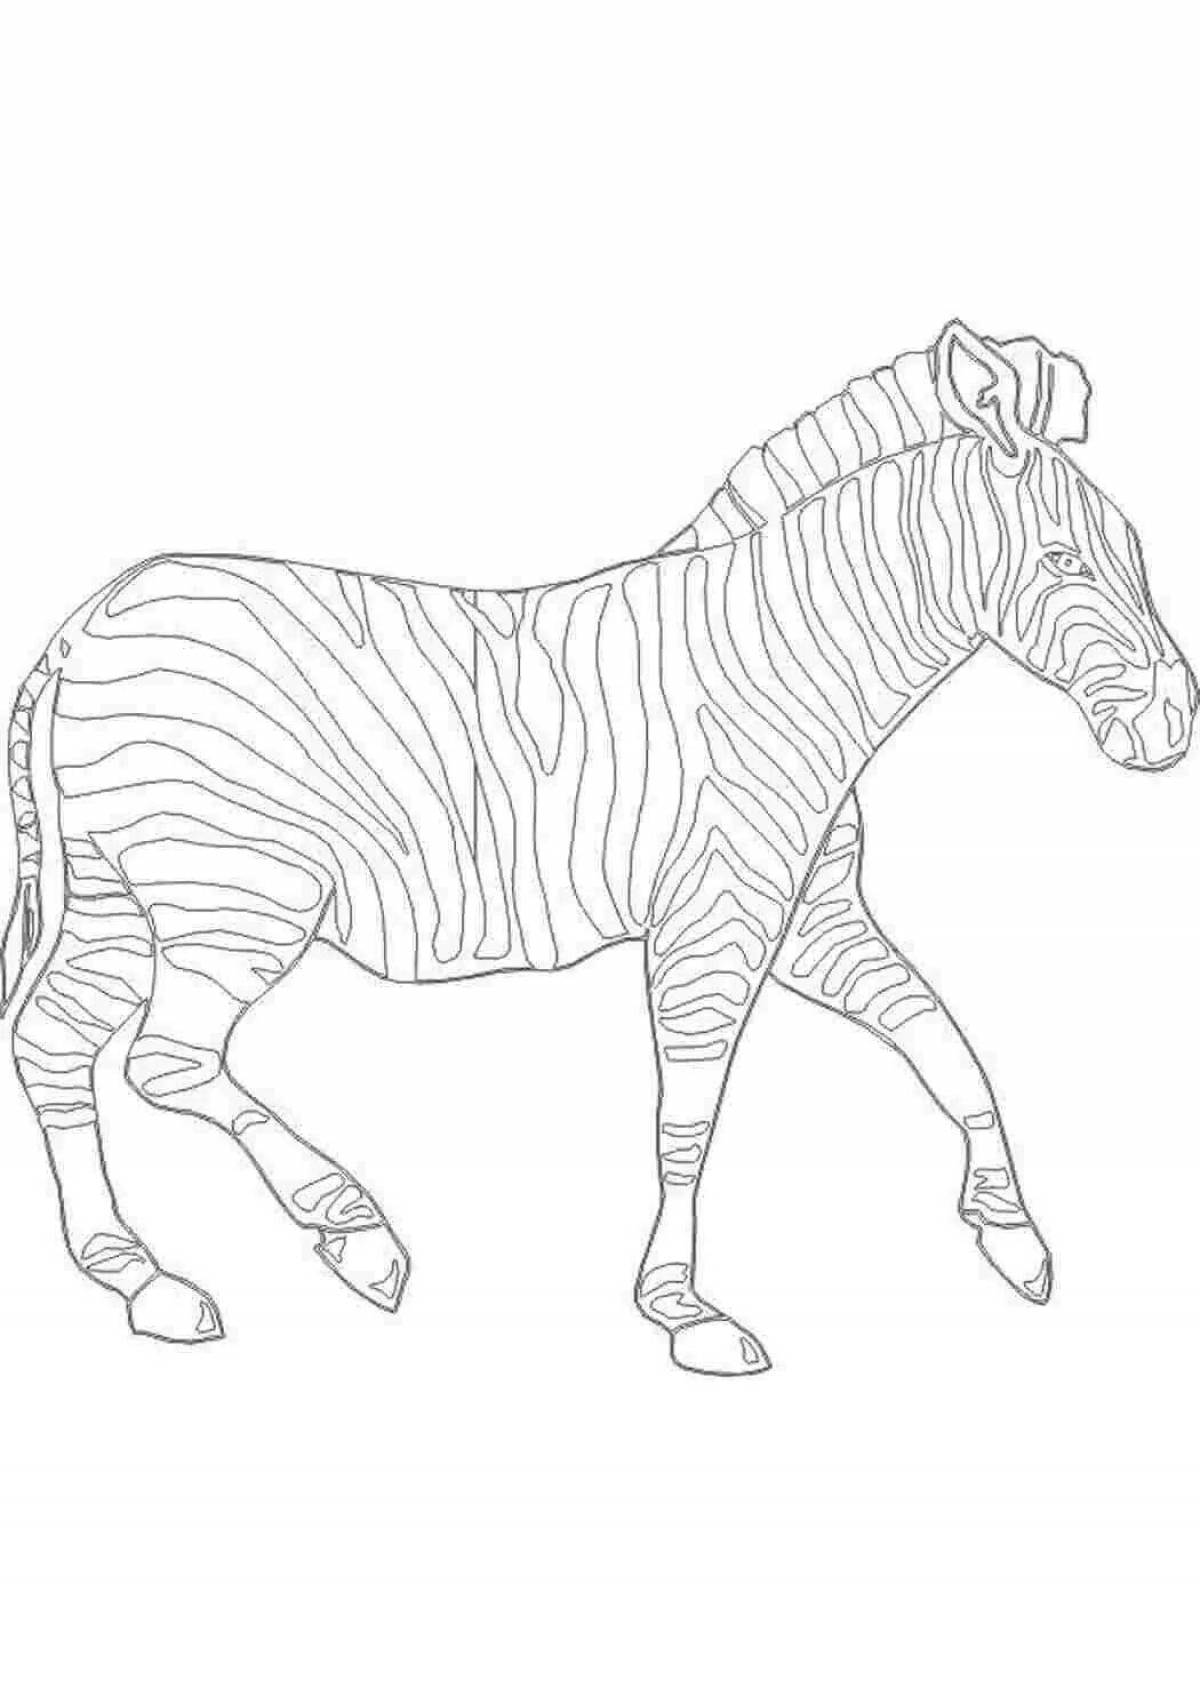 Delightful zebra pattern